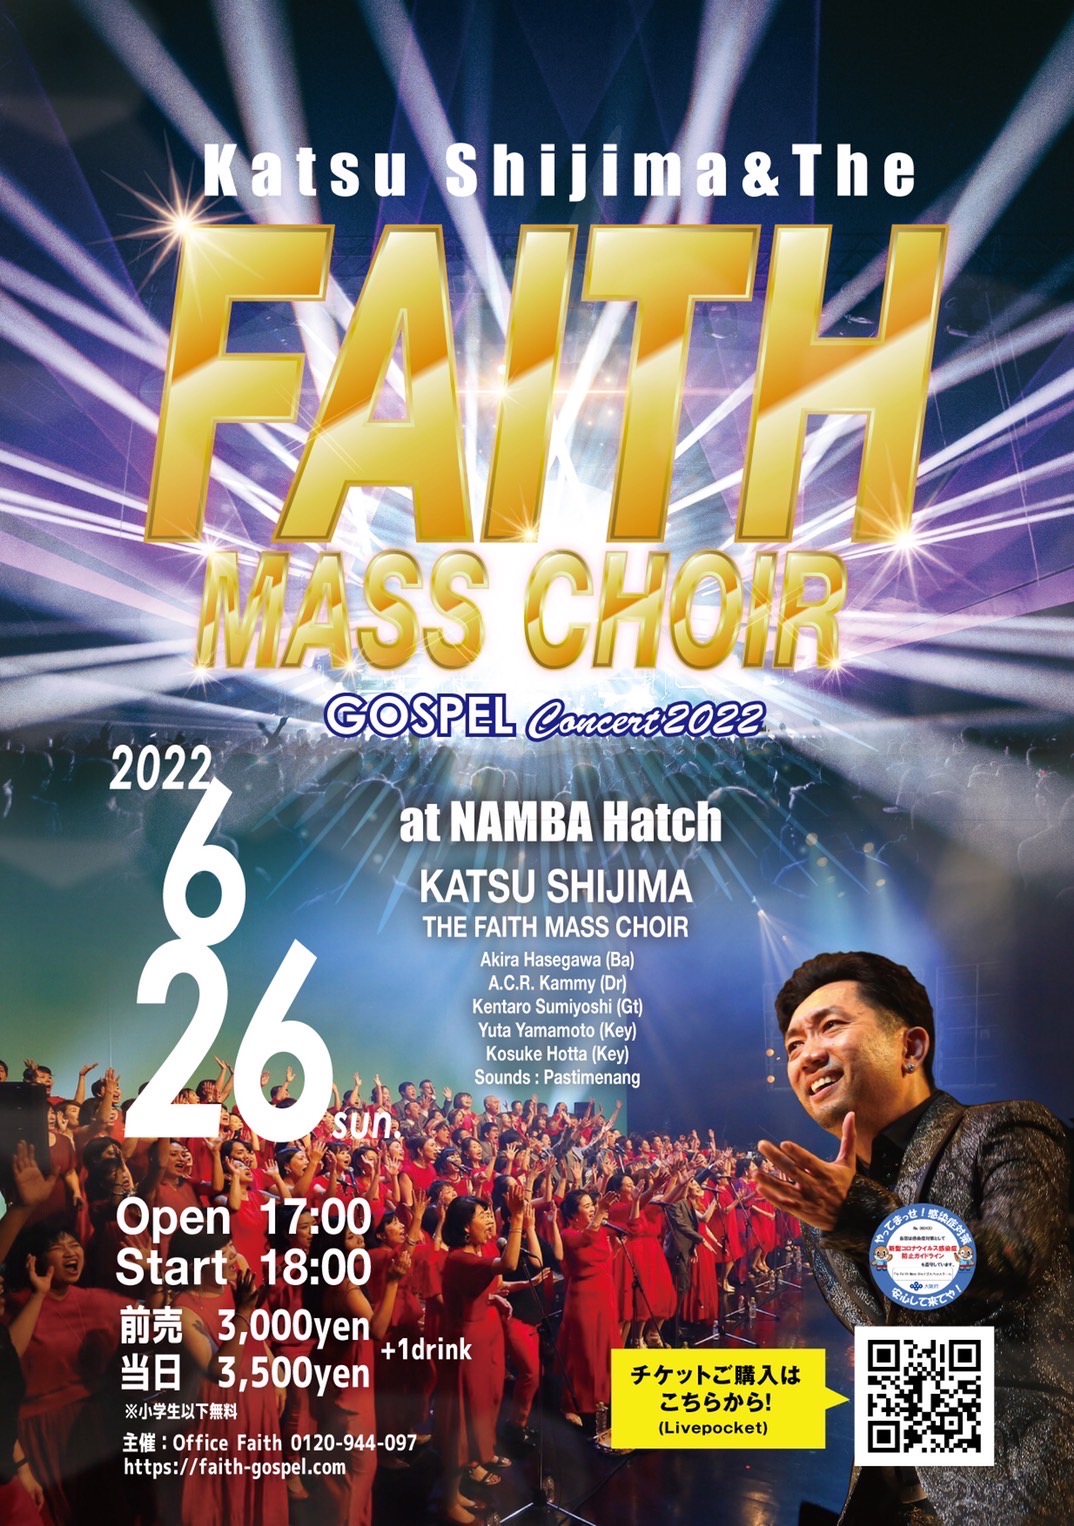 Katsu Shijima & The Faith Mass Choir「GOSPEL CONCERT 2022」at なんばHatch